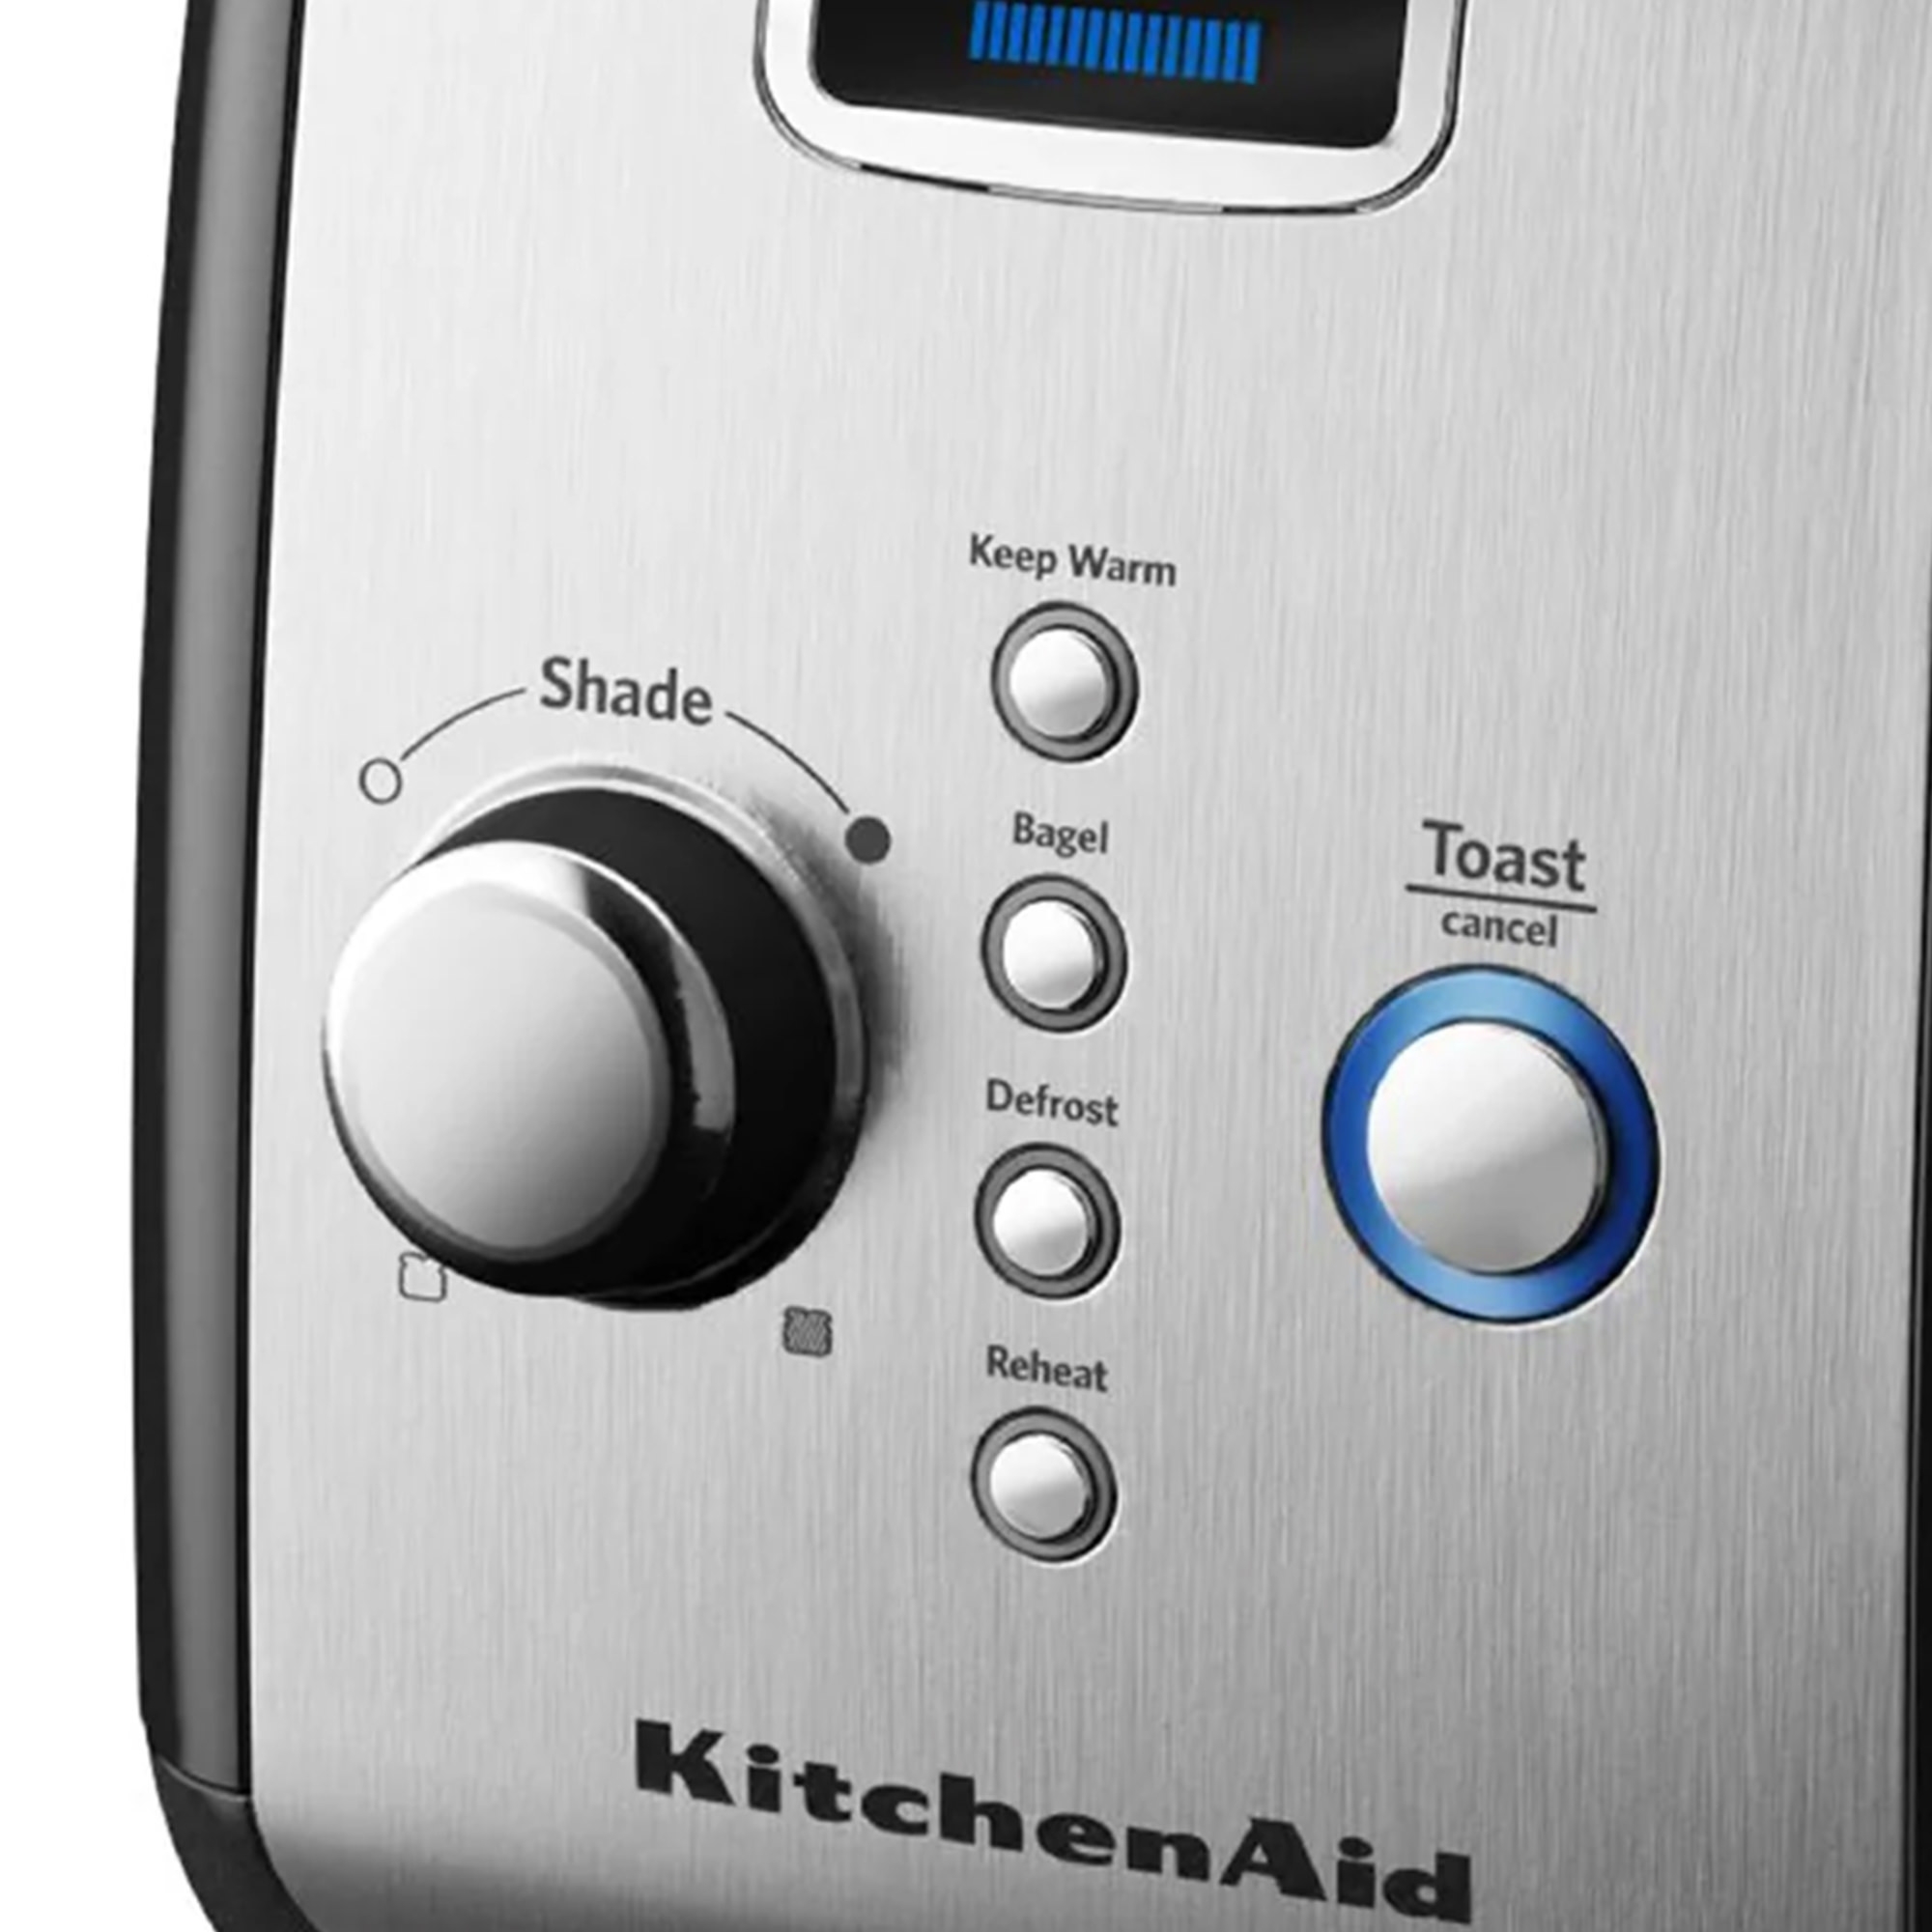 KitchenAid Artisan KMT223 2 Slice Toaster Onyx Black Image 2